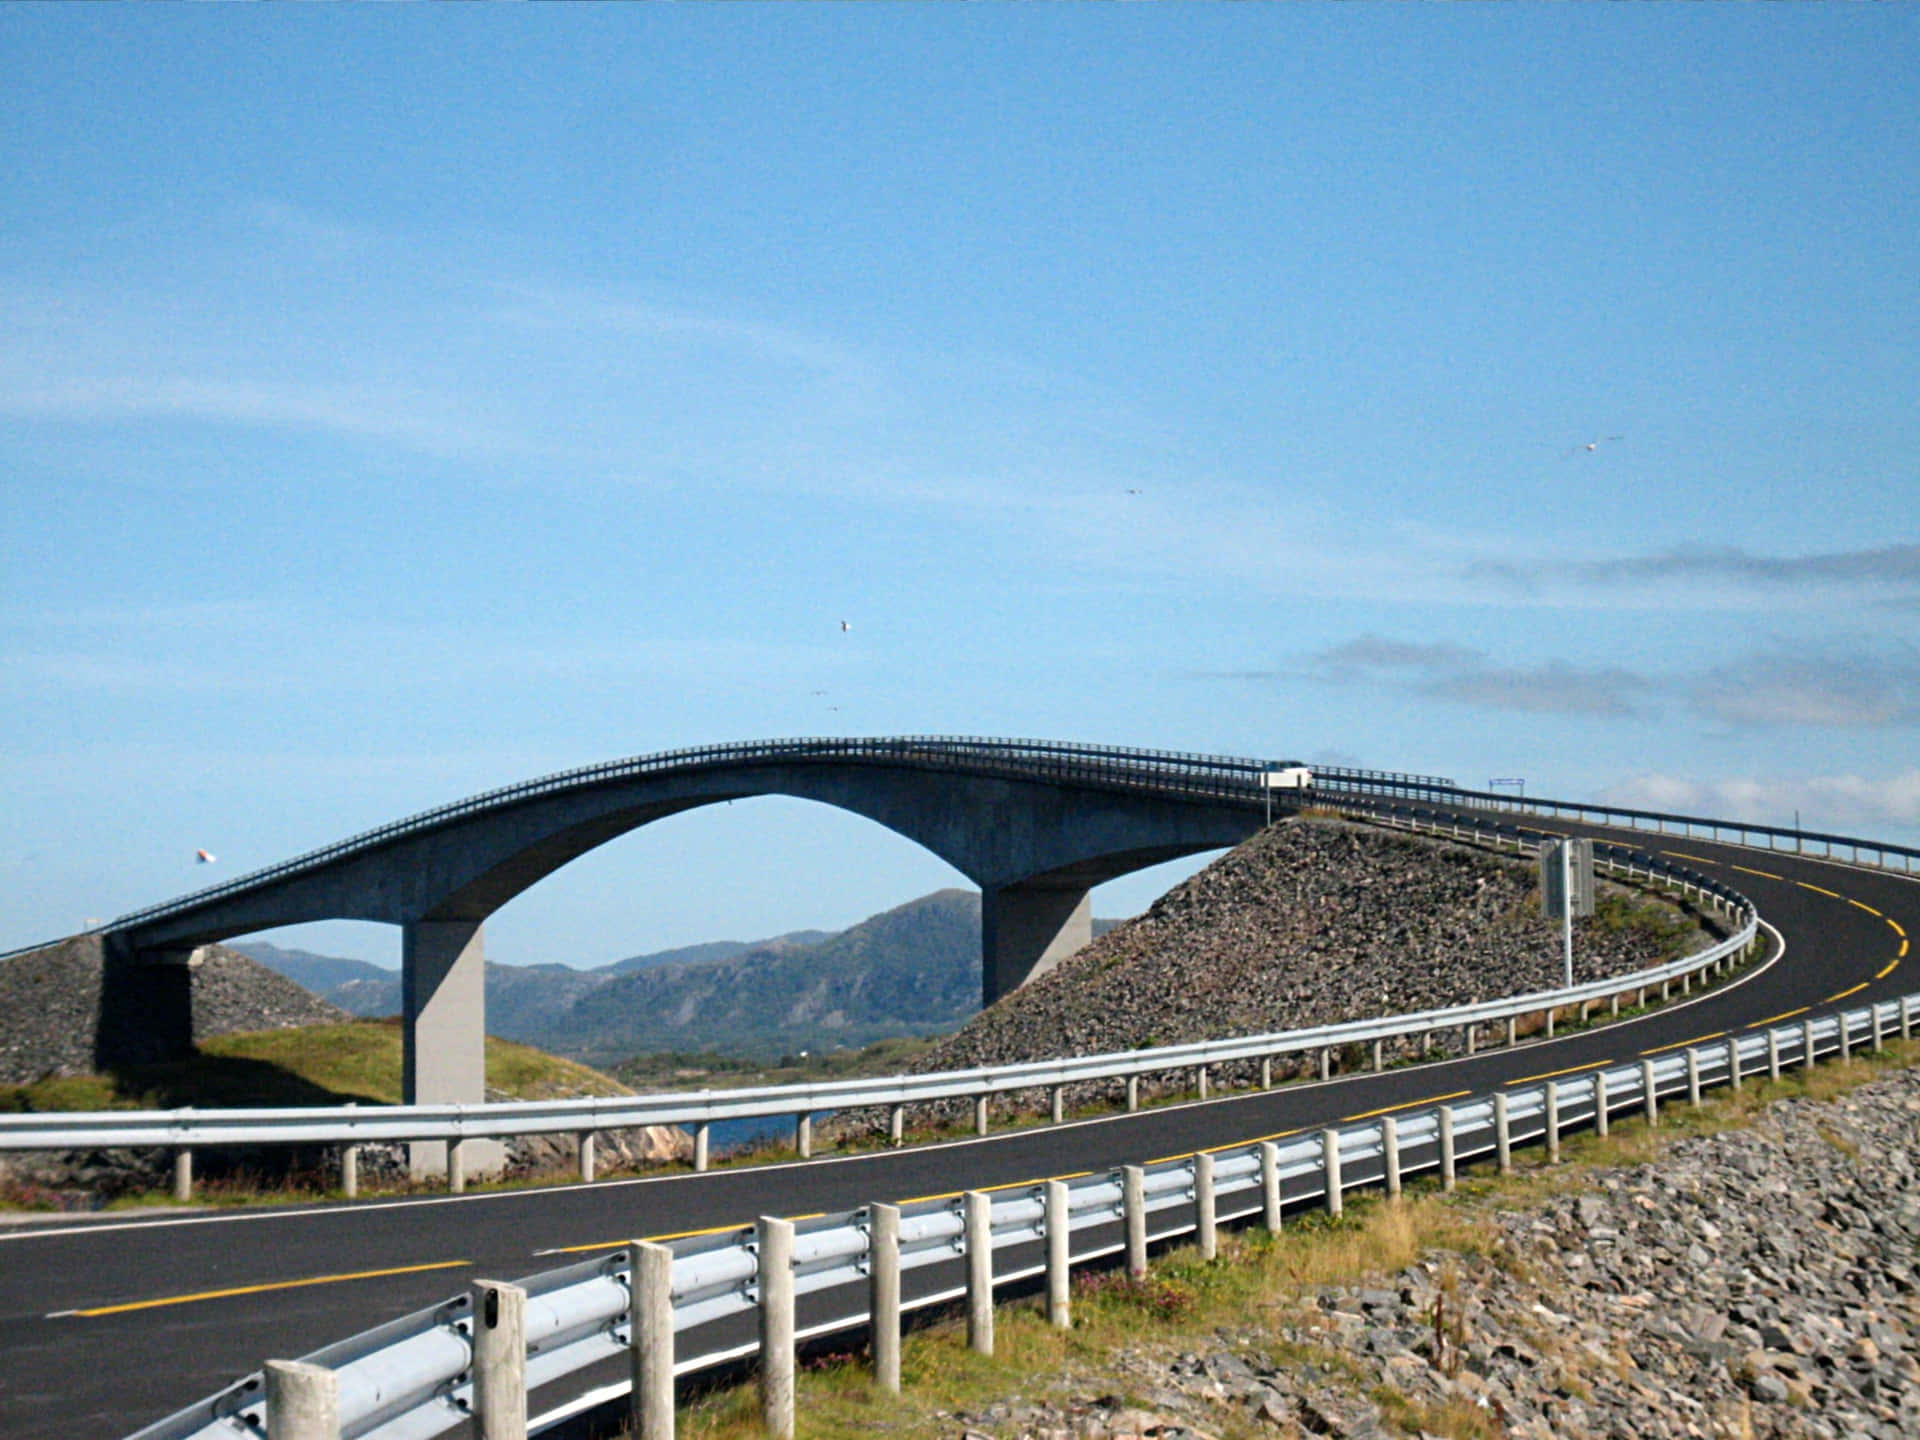 Storseisundetbrücke, Sonniger Tag In Norwegen. Wallpaper